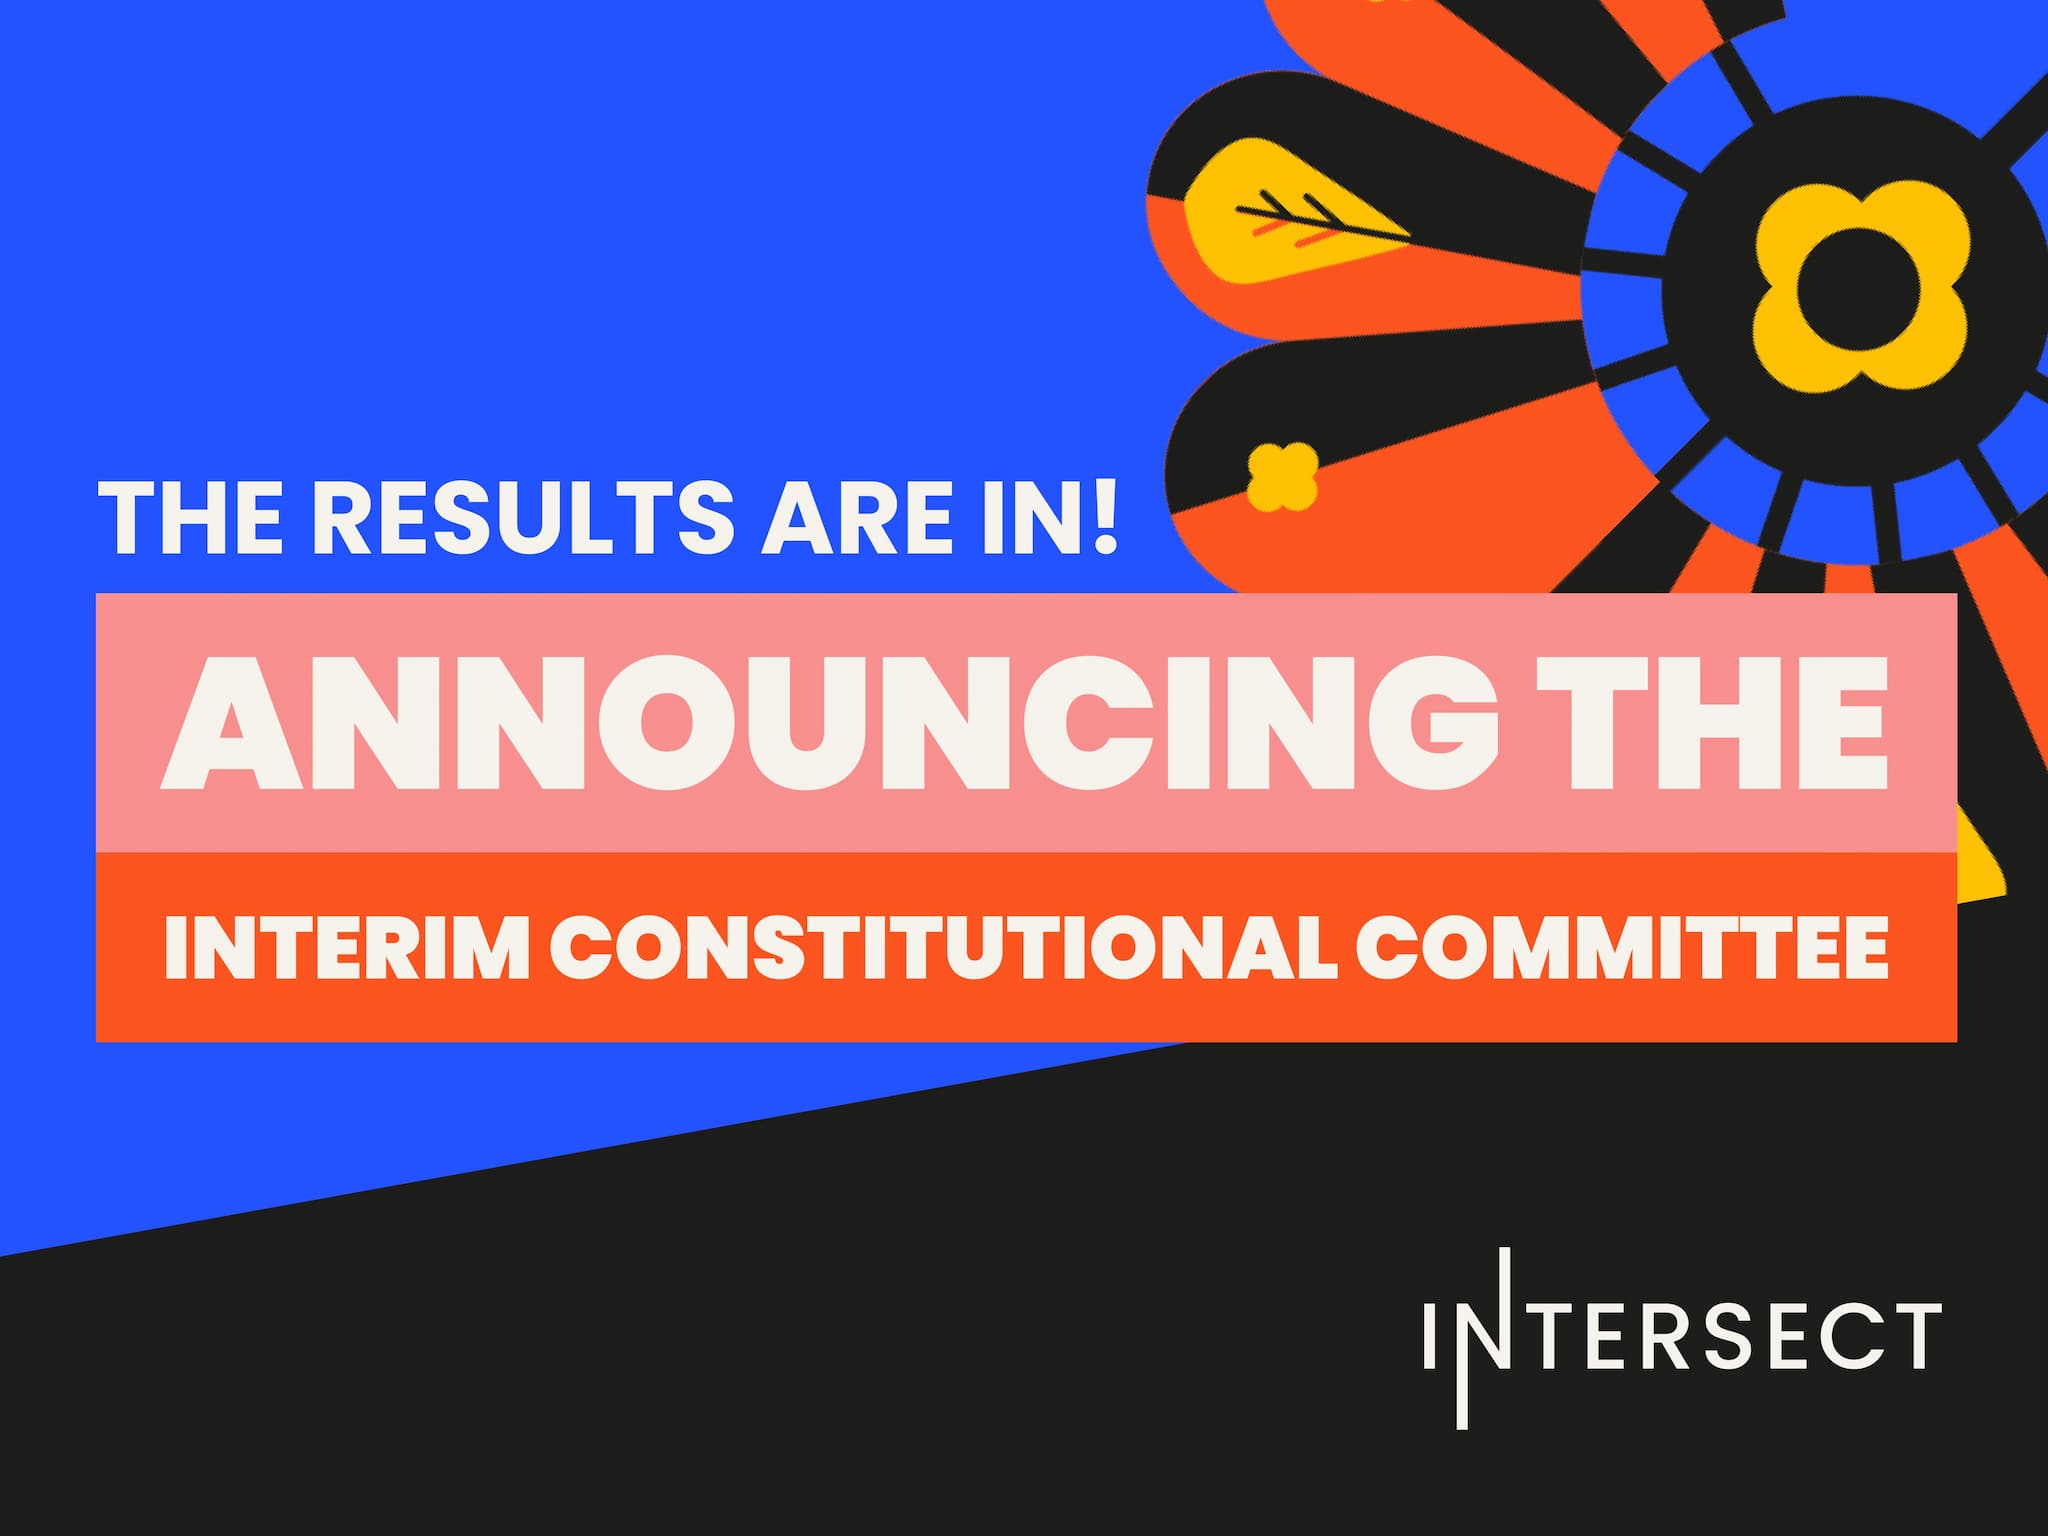 Meet the interim Constitutional Committee